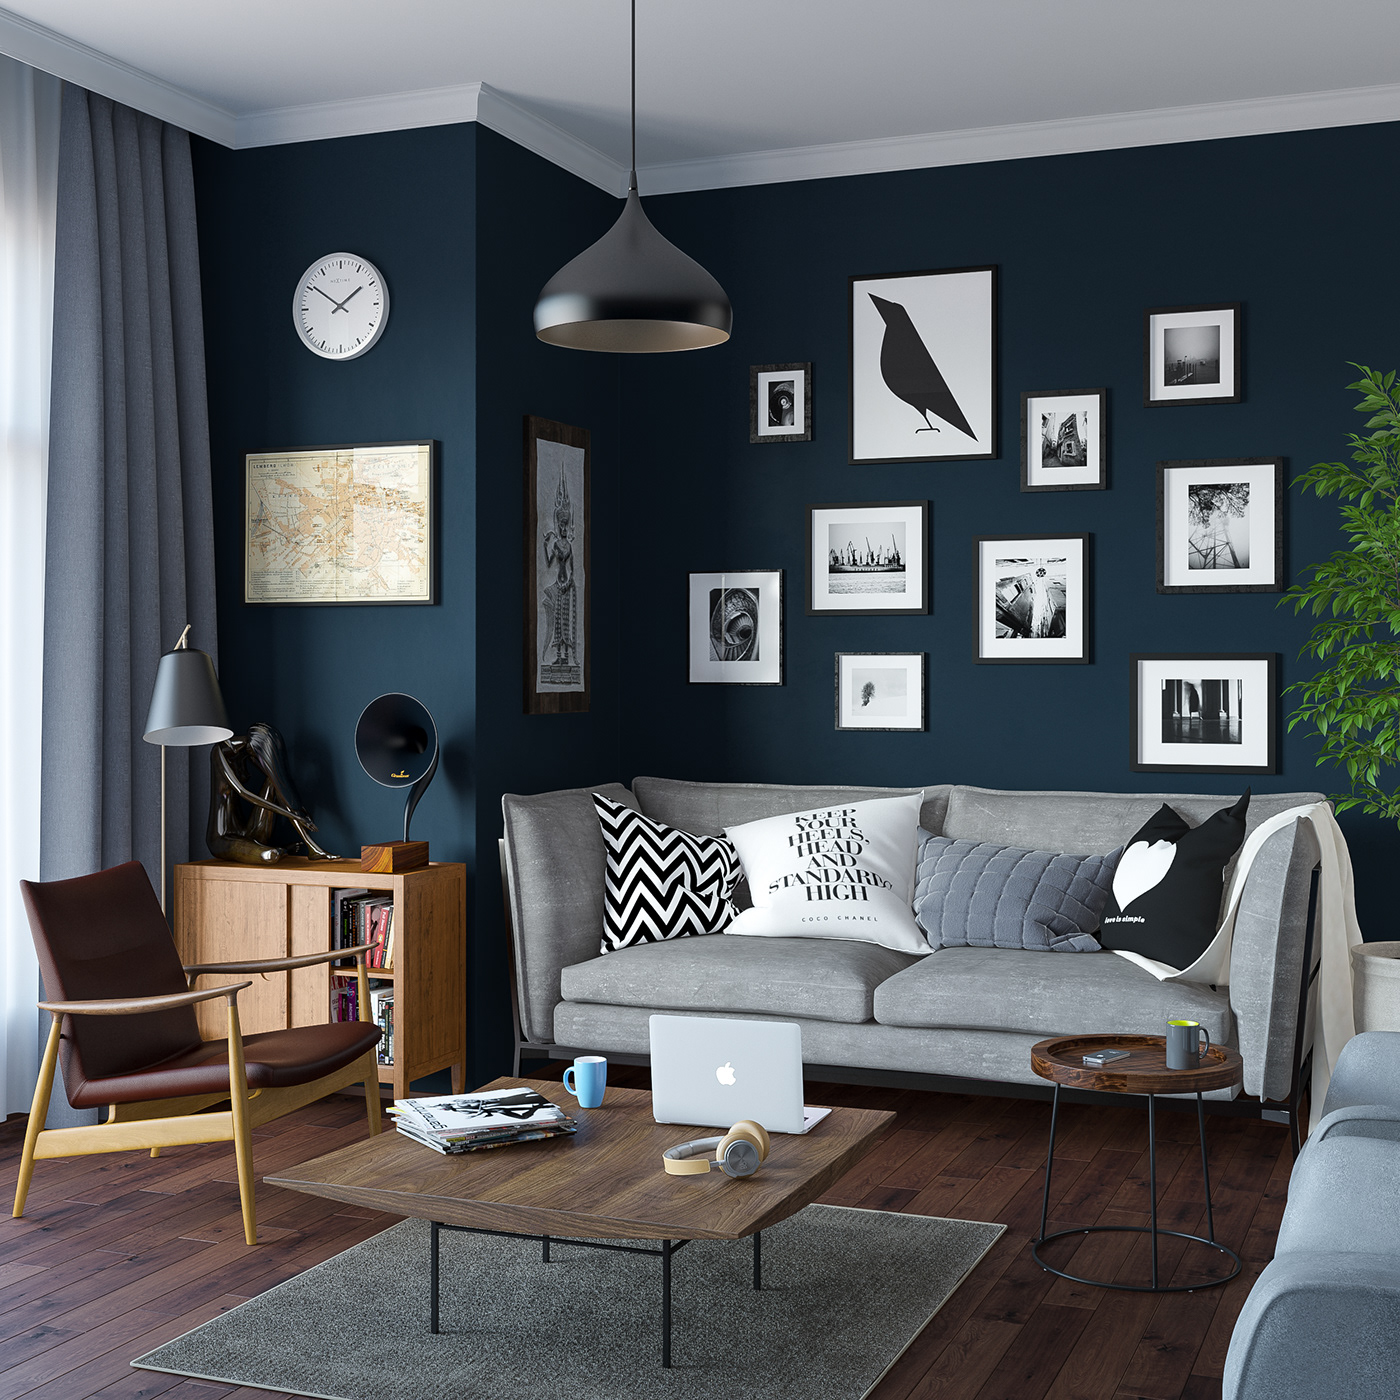 3ds max vray interior design  living room Render 3D Digital Art  architecture